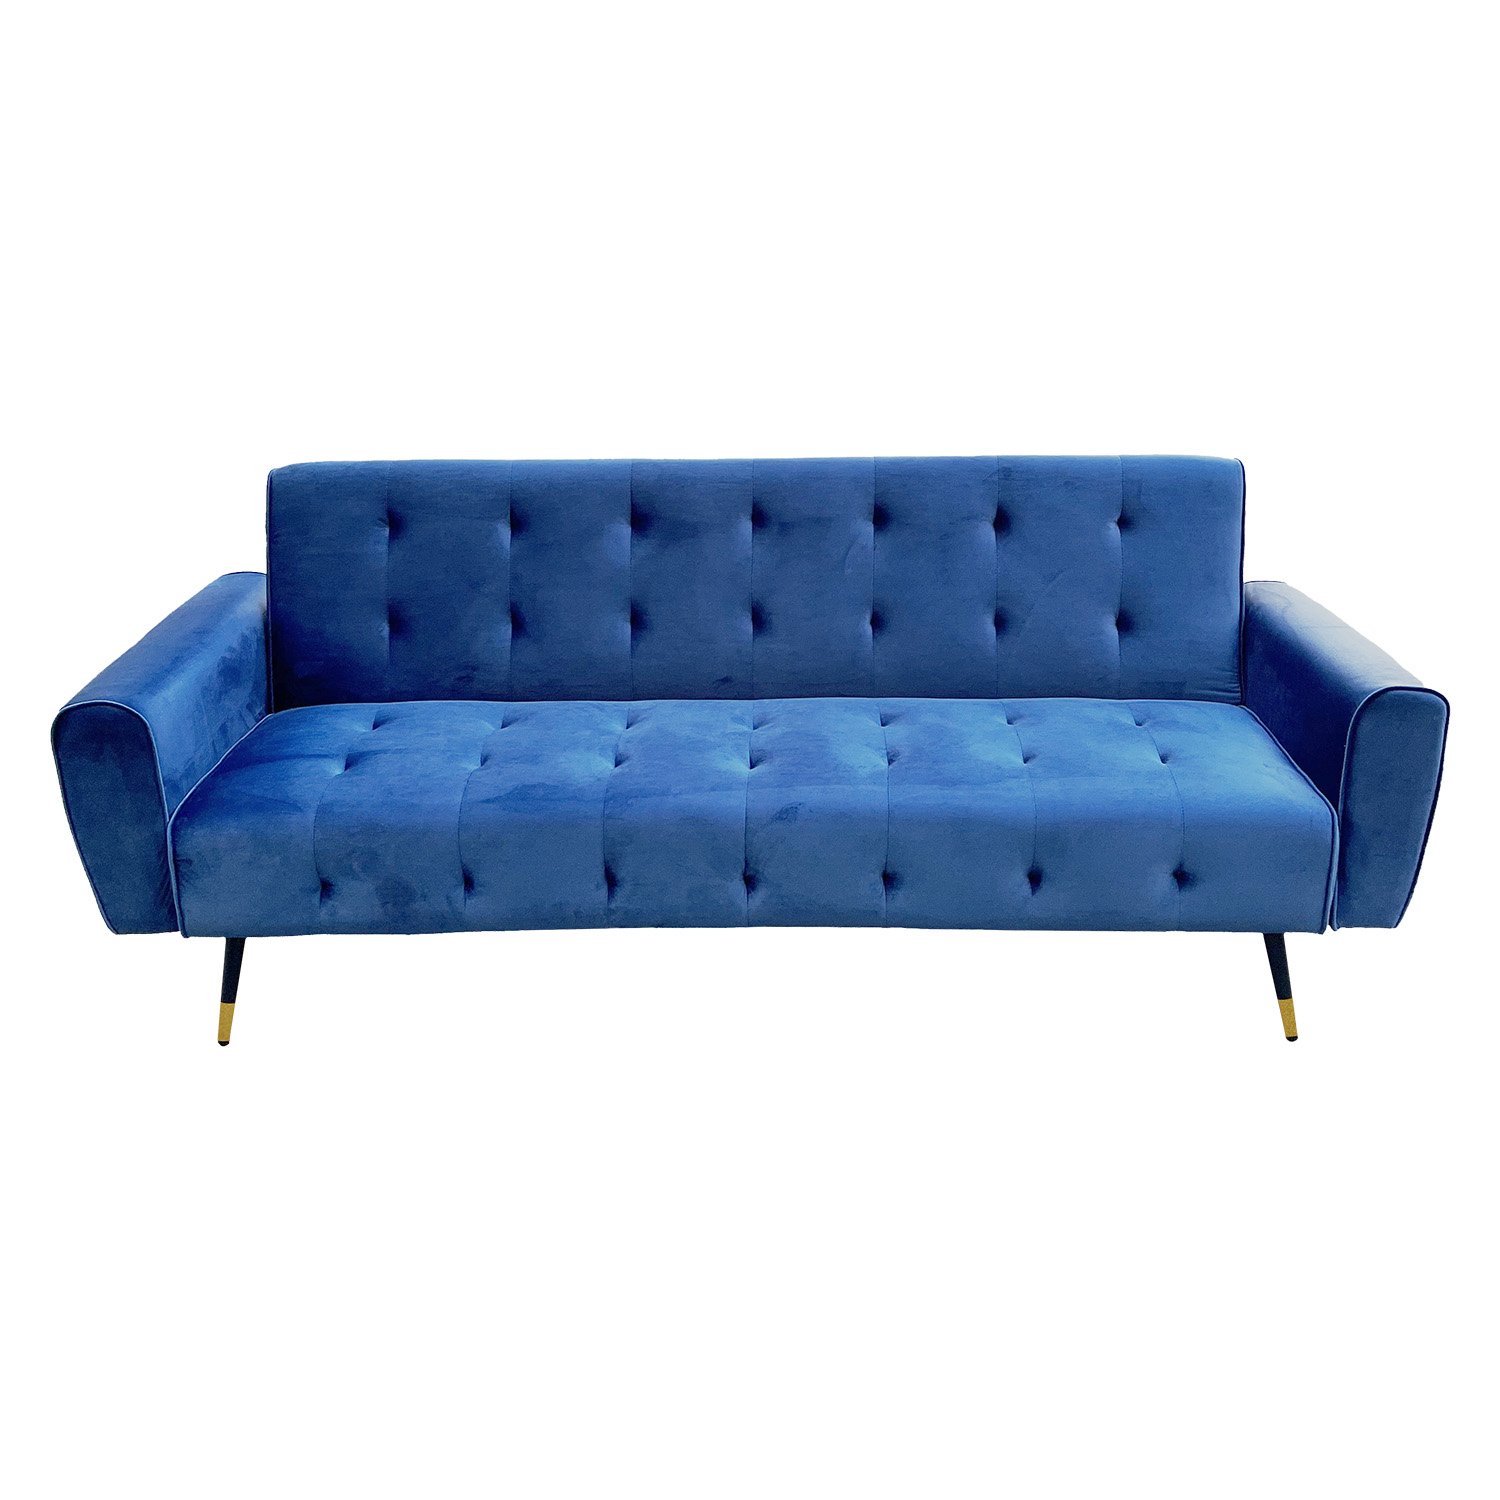 Ava Tufted Velvet Sofa Bed by Sarantino - Blue 1